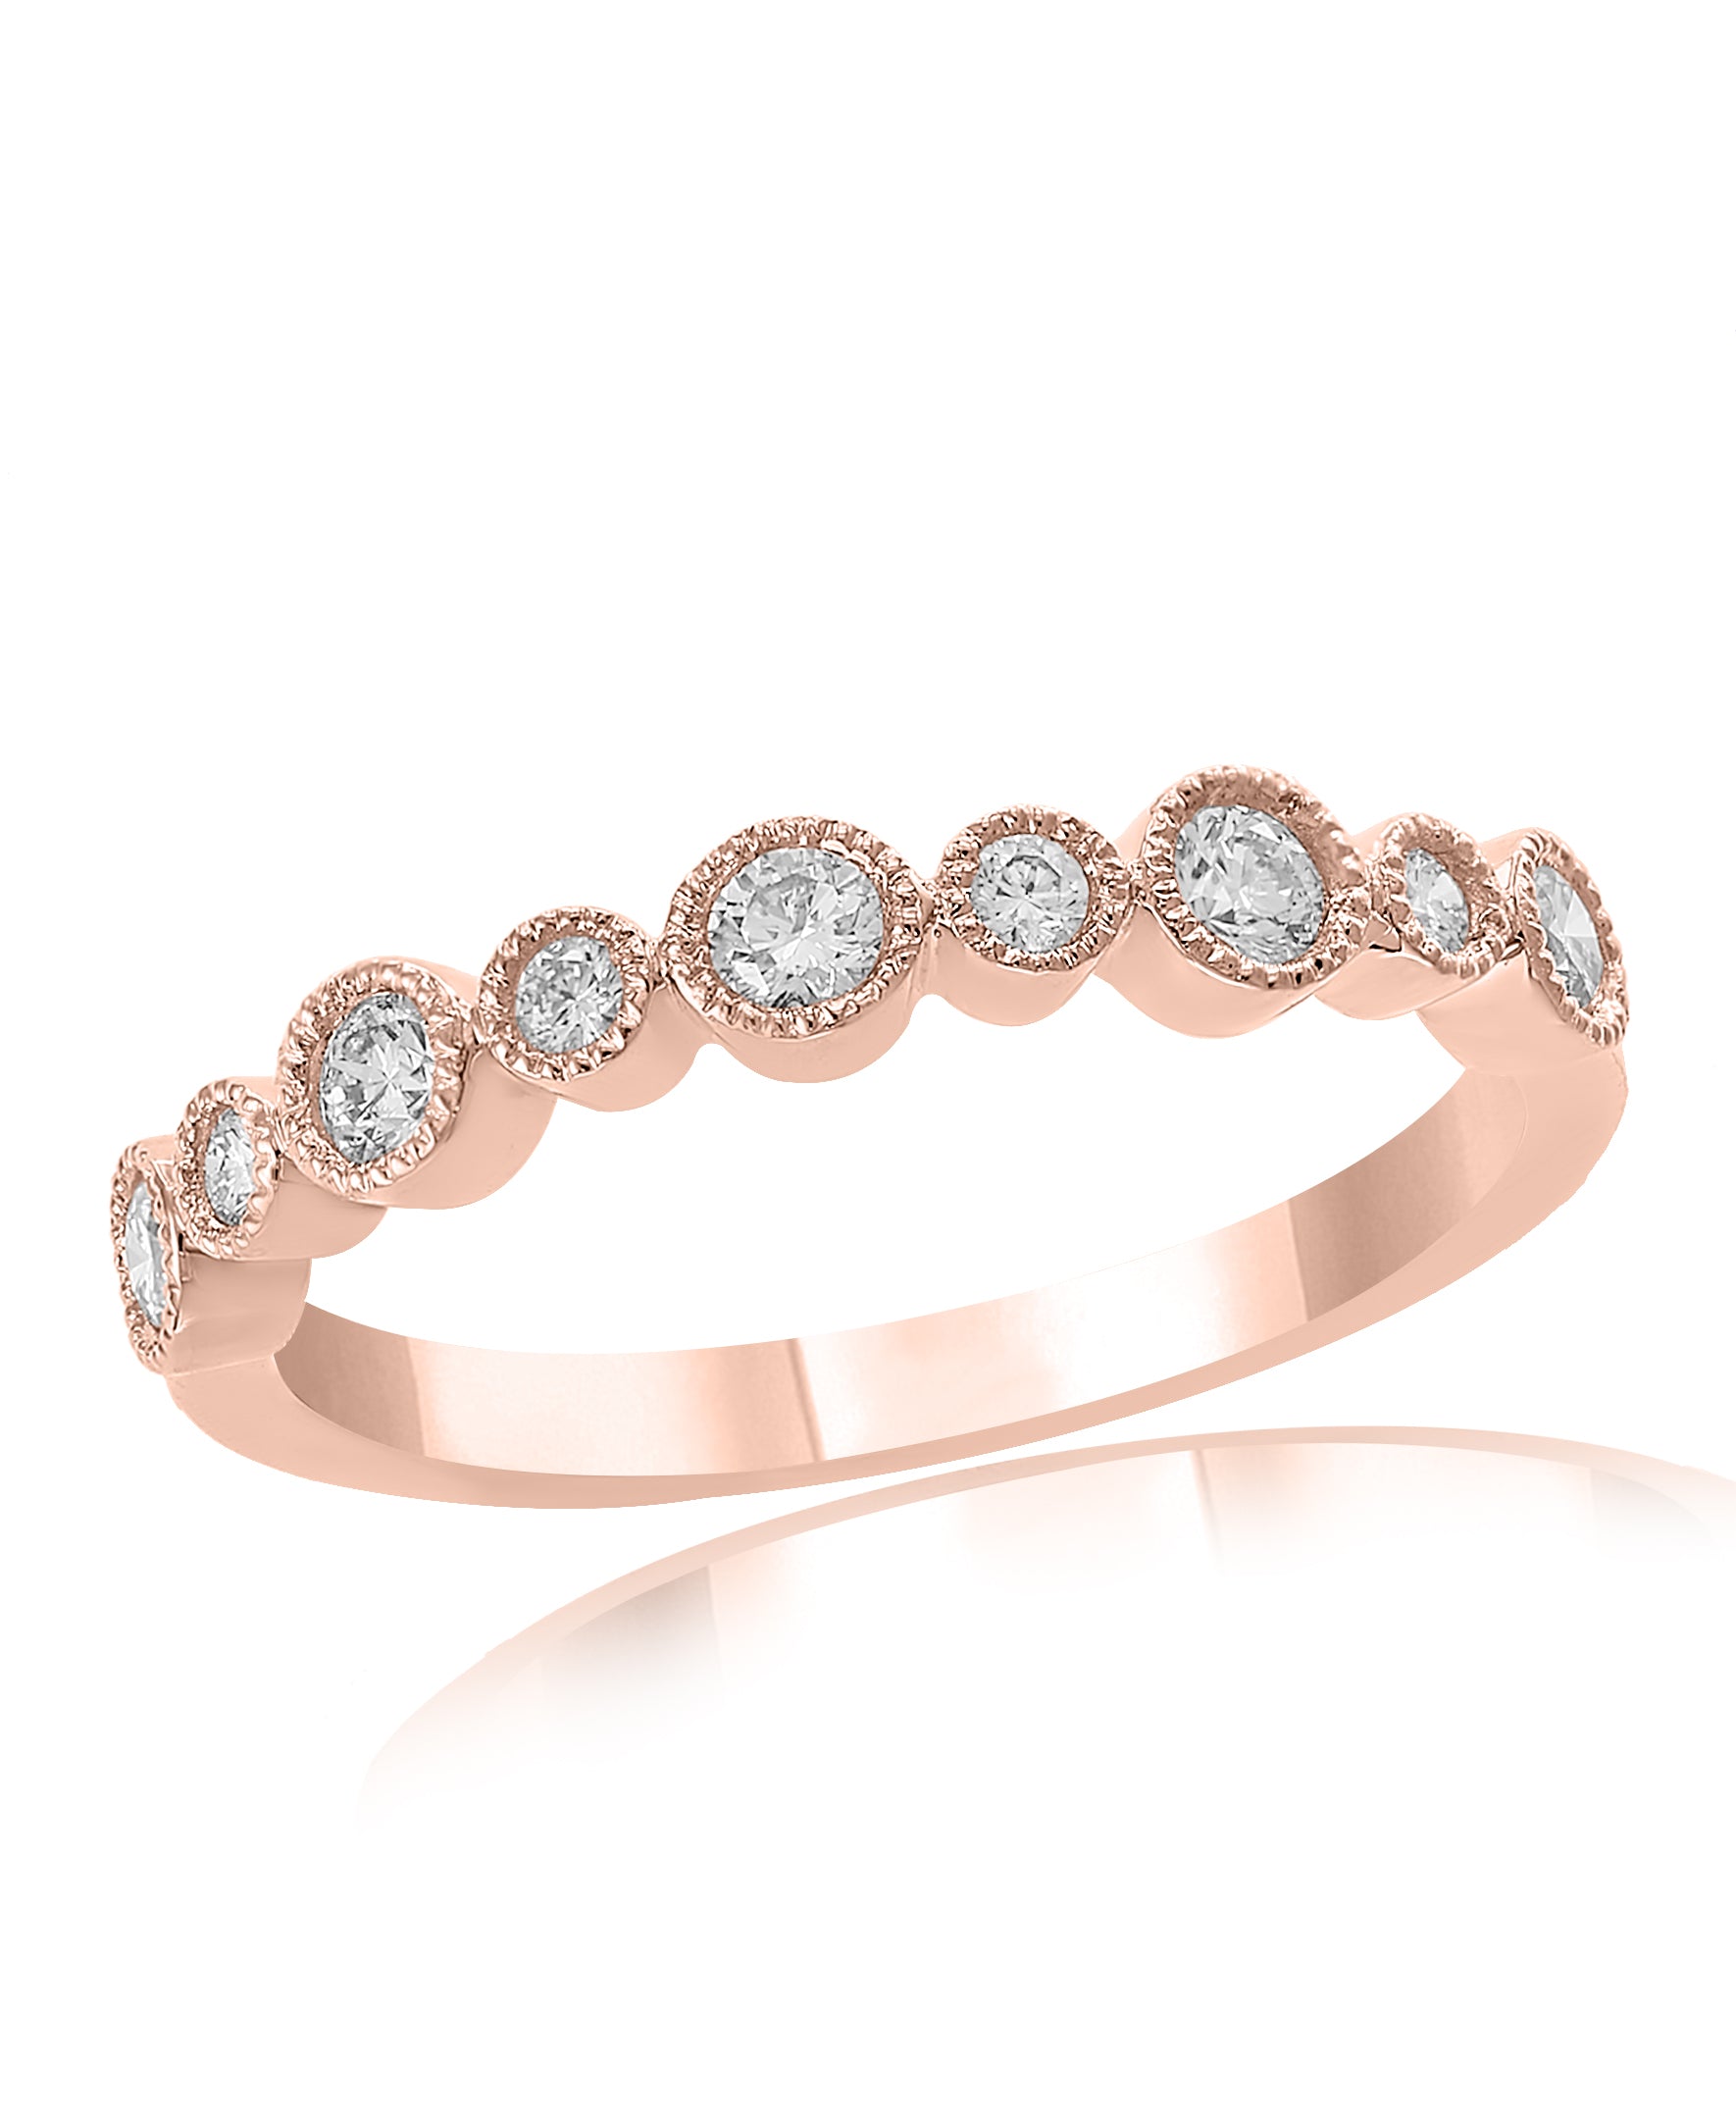 14K Rose Gold Bezel Set Diamond Ring with Milgrain Accents